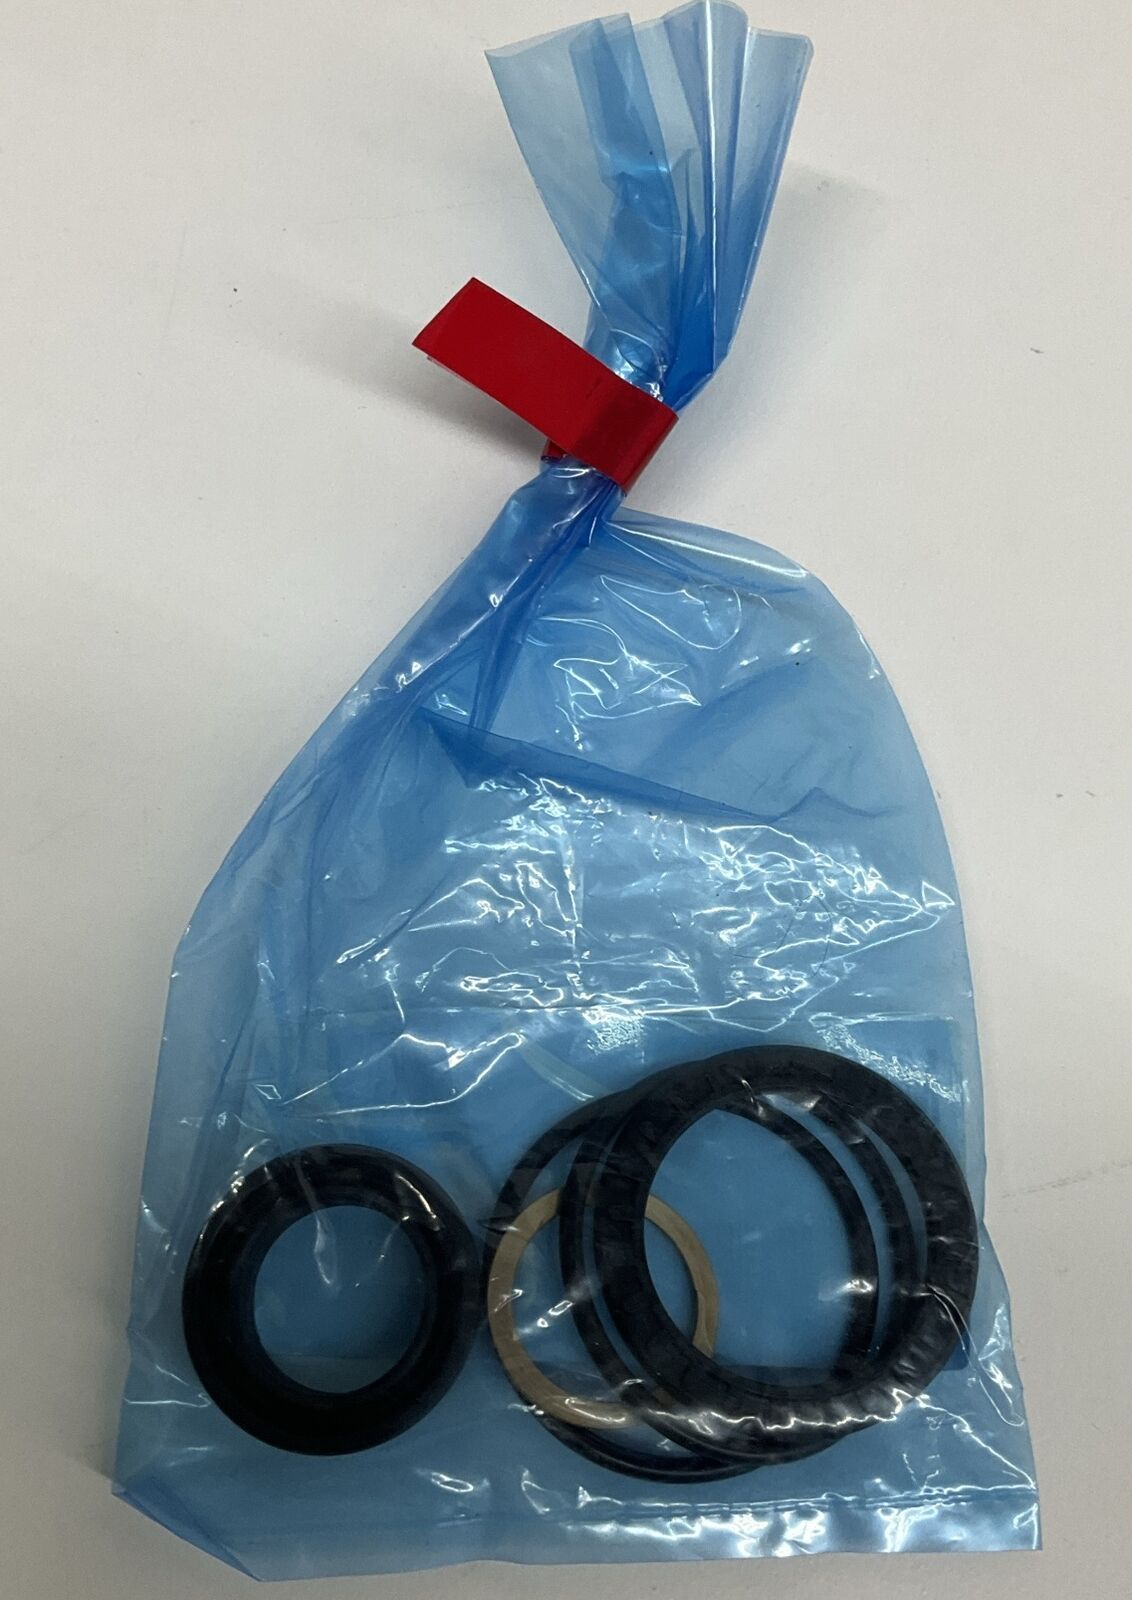 SMC MK32Z-PS New Clamp Cylinder Seal Repair Kit (GR114)